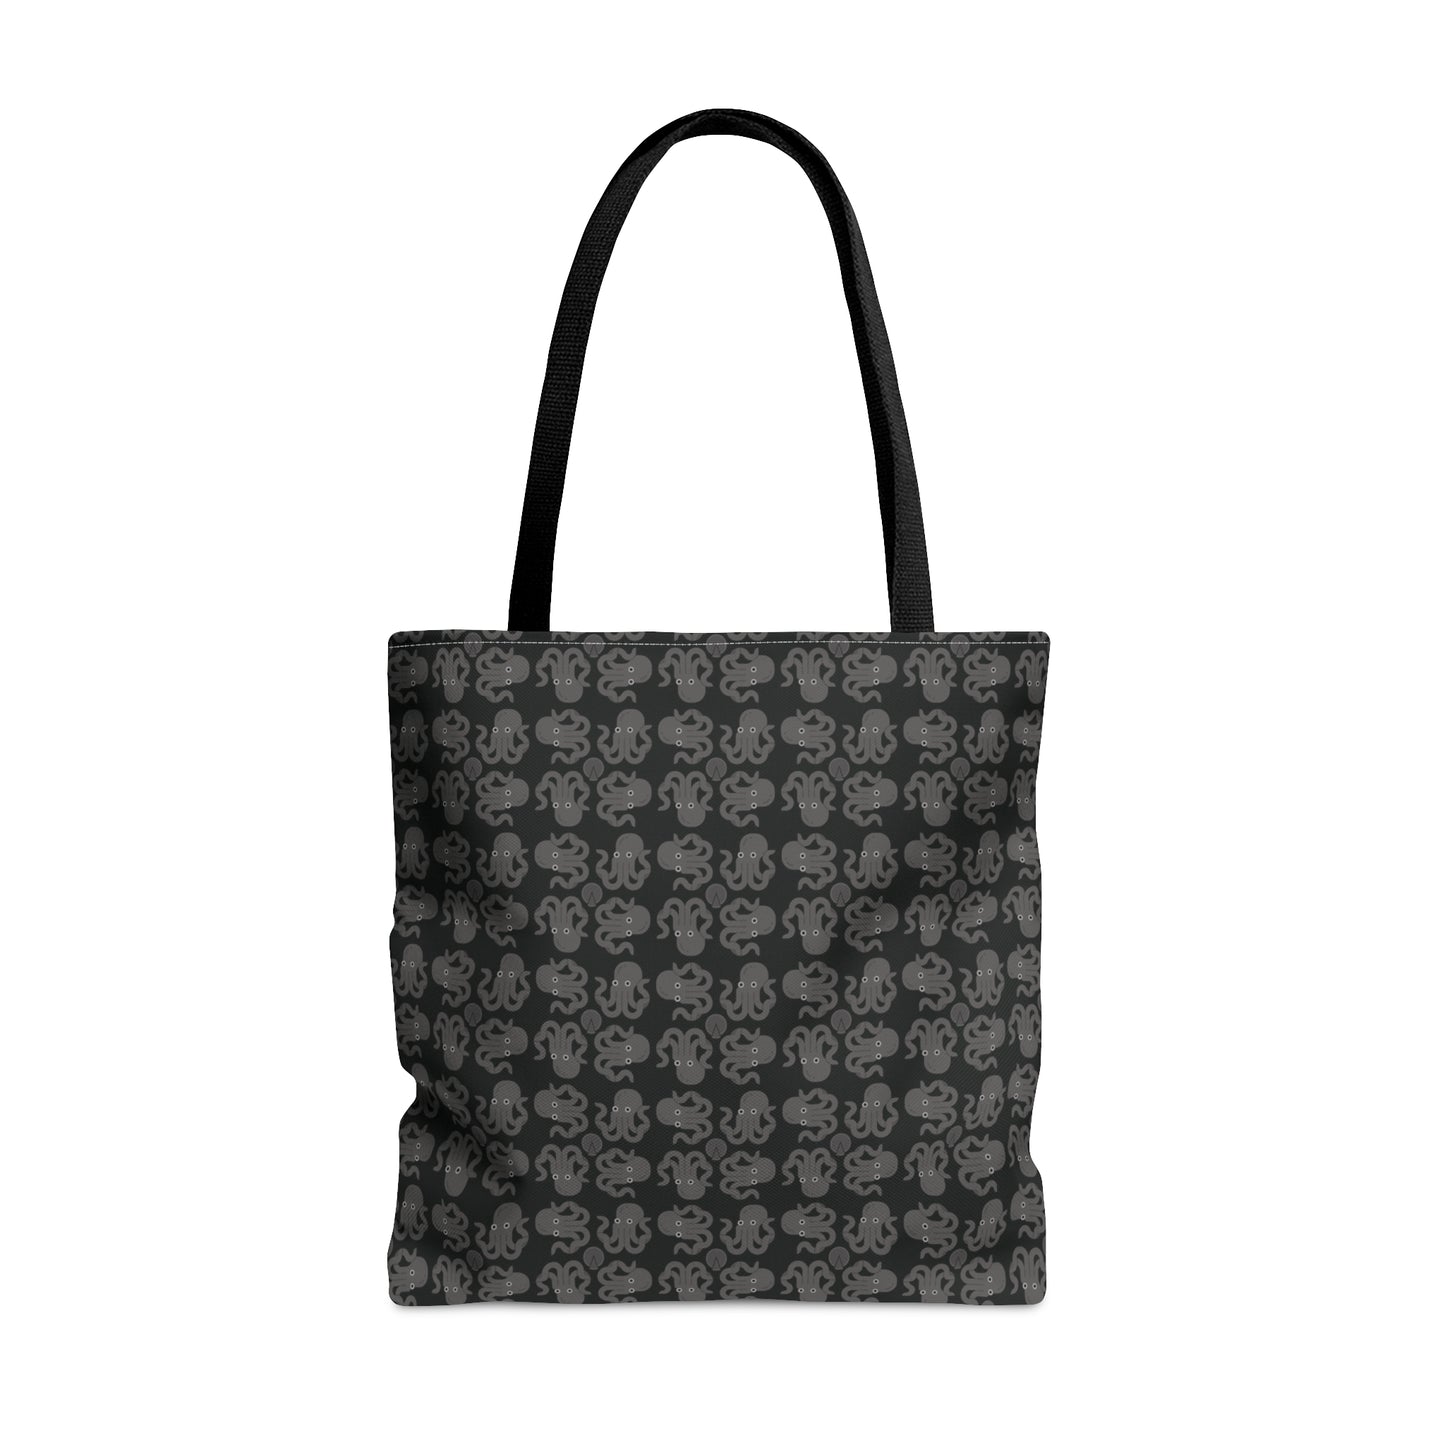 Octopie - Gray - Black 000000 - Tote Bag